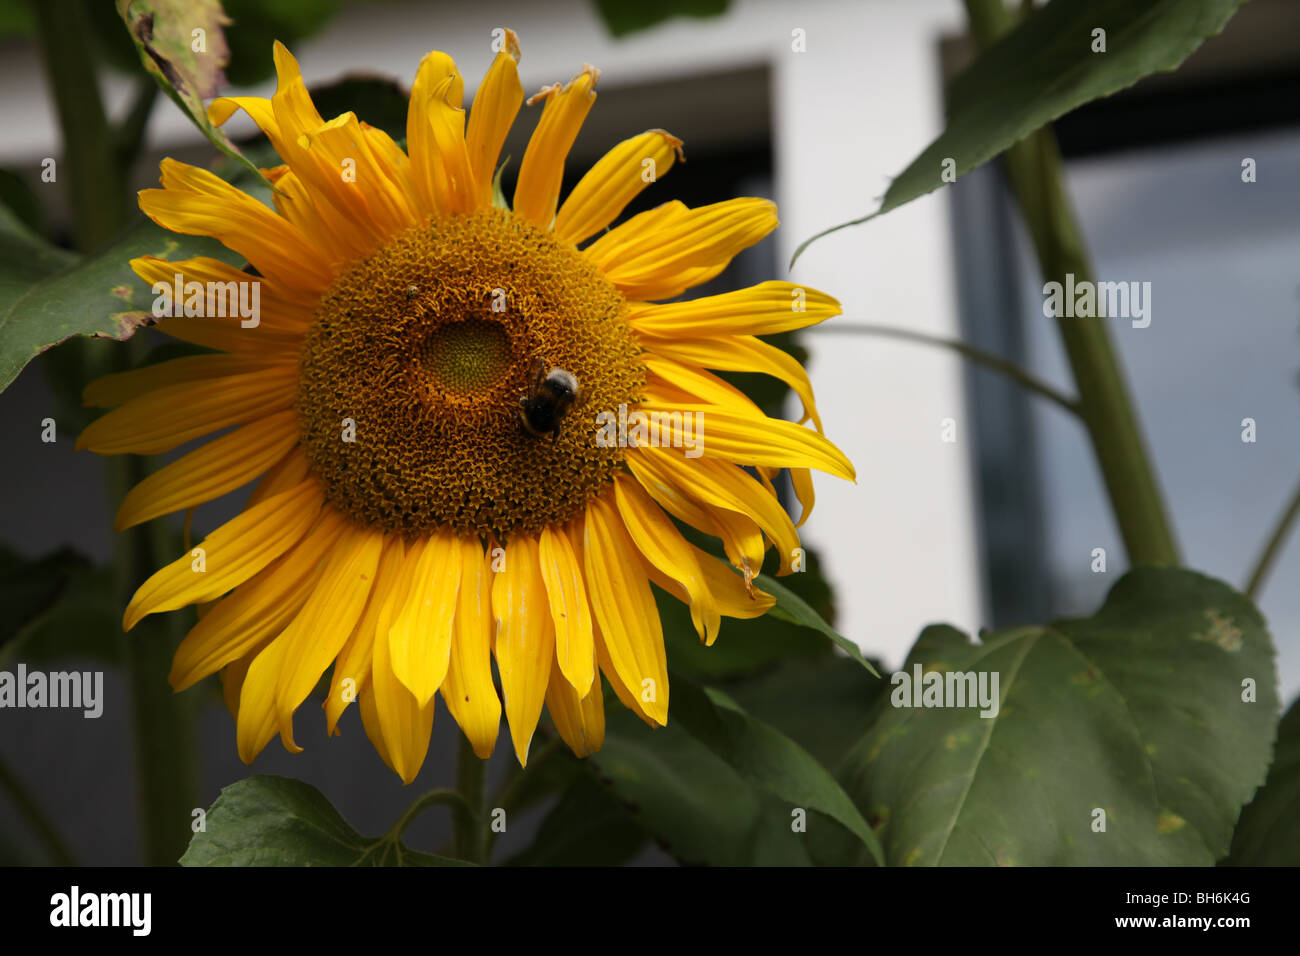 Bee alighting on sunflower Stock Photo